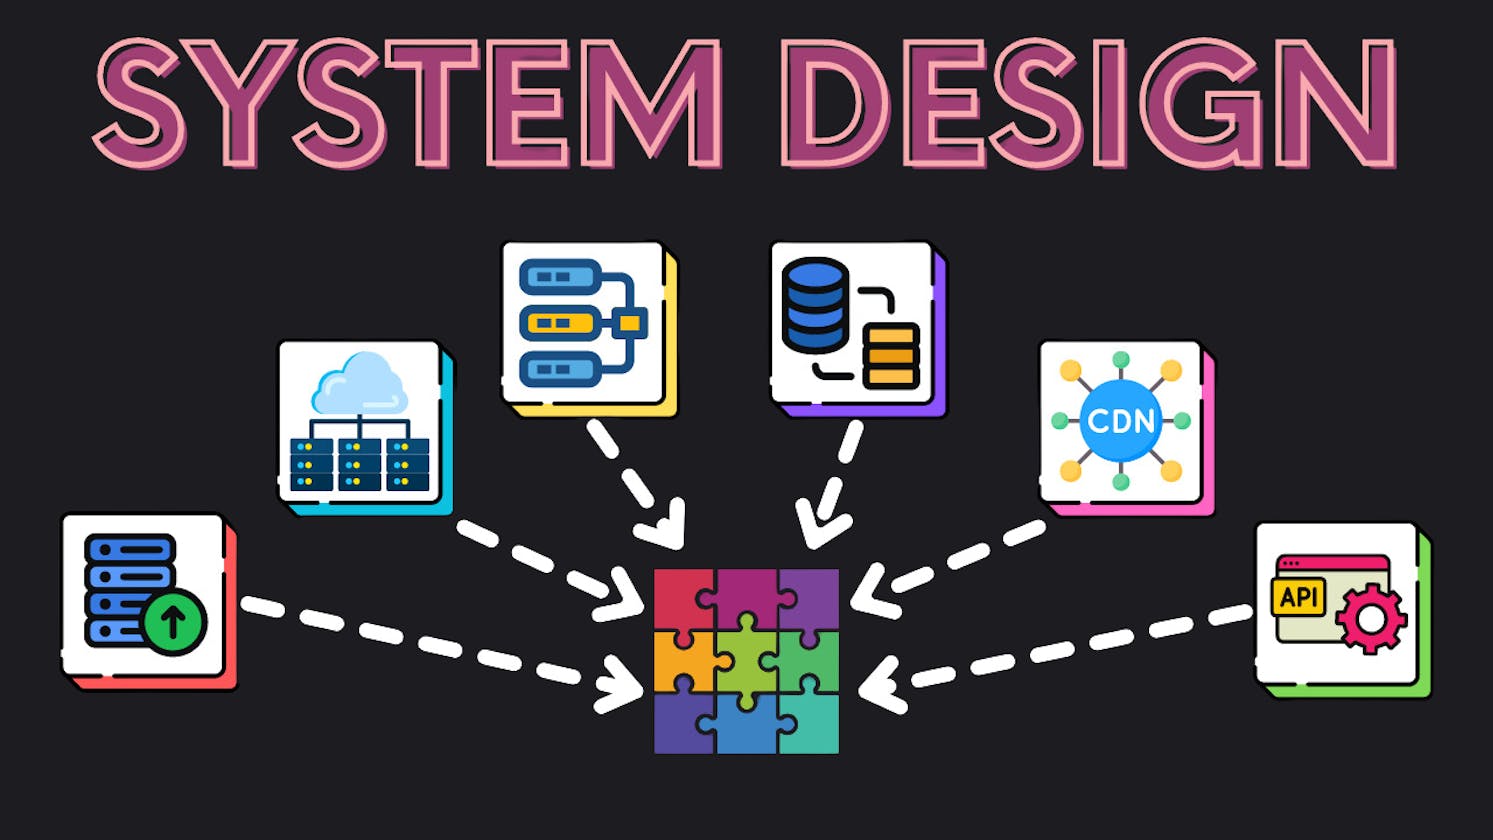 System Design Concepts